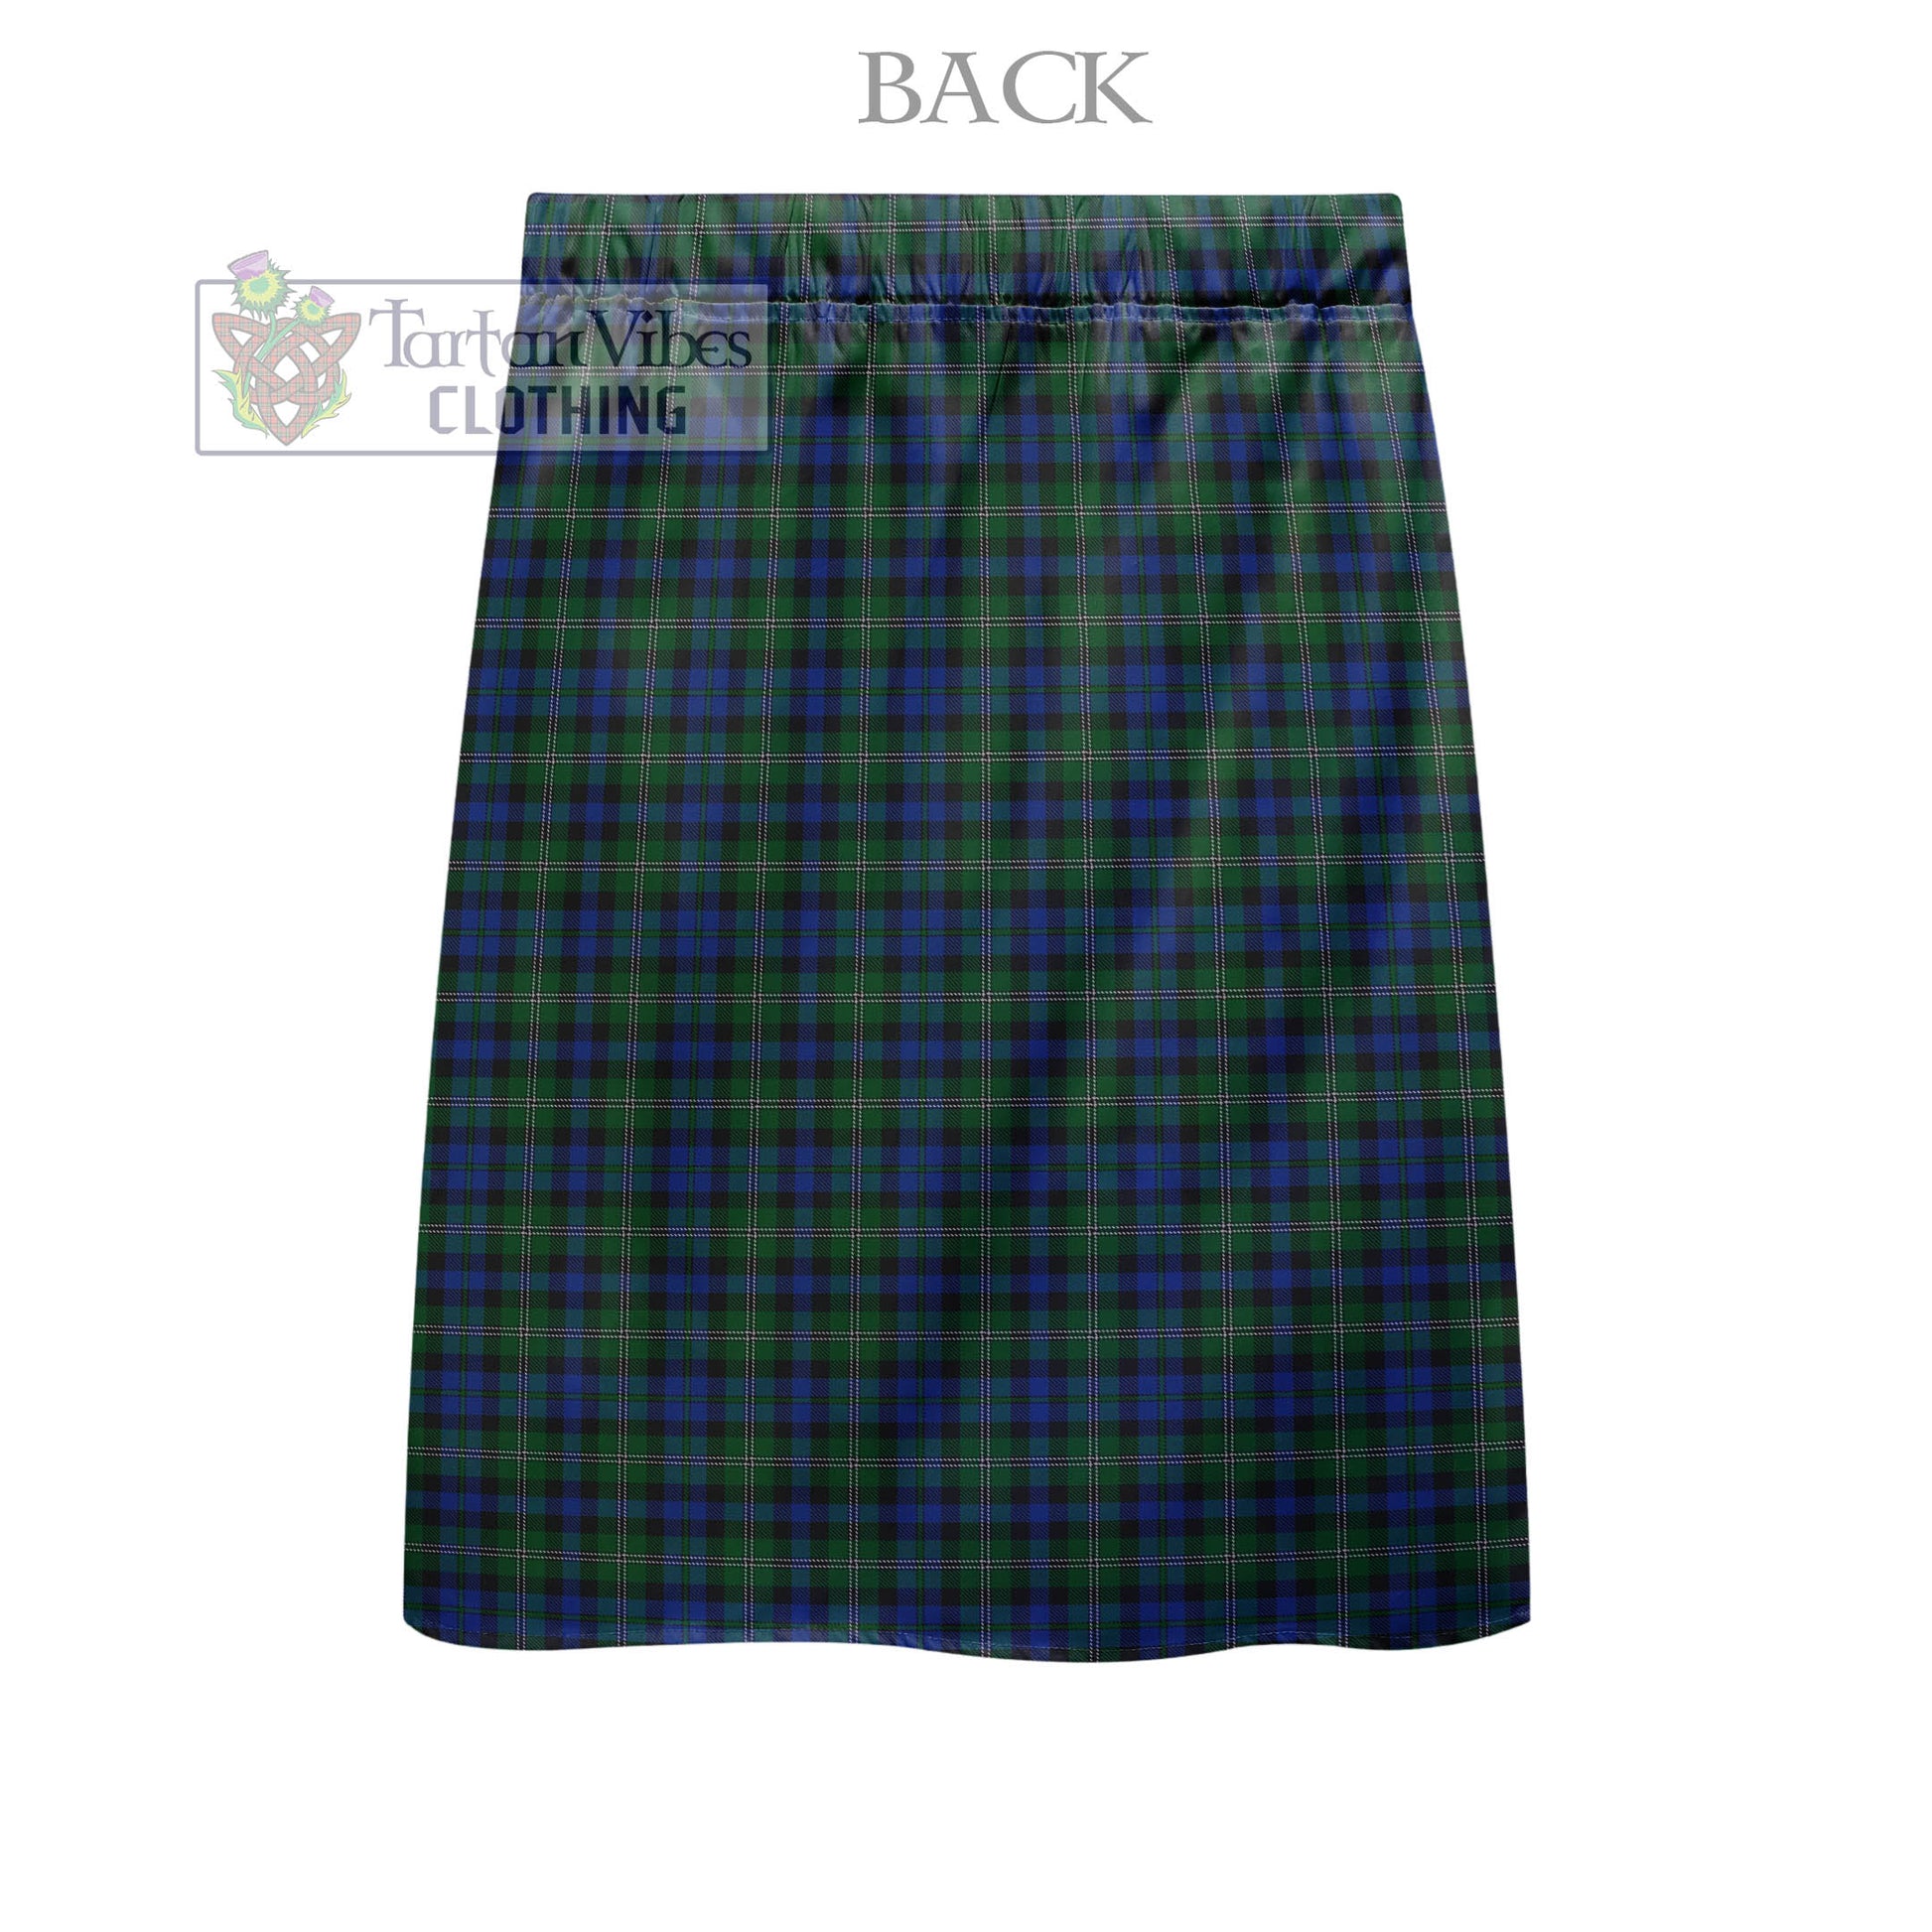 Tartan Vibes Clothing Stephenson Hunting Tartan Men's Pleated Skirt - Fashion Casual Retro Scottish Style